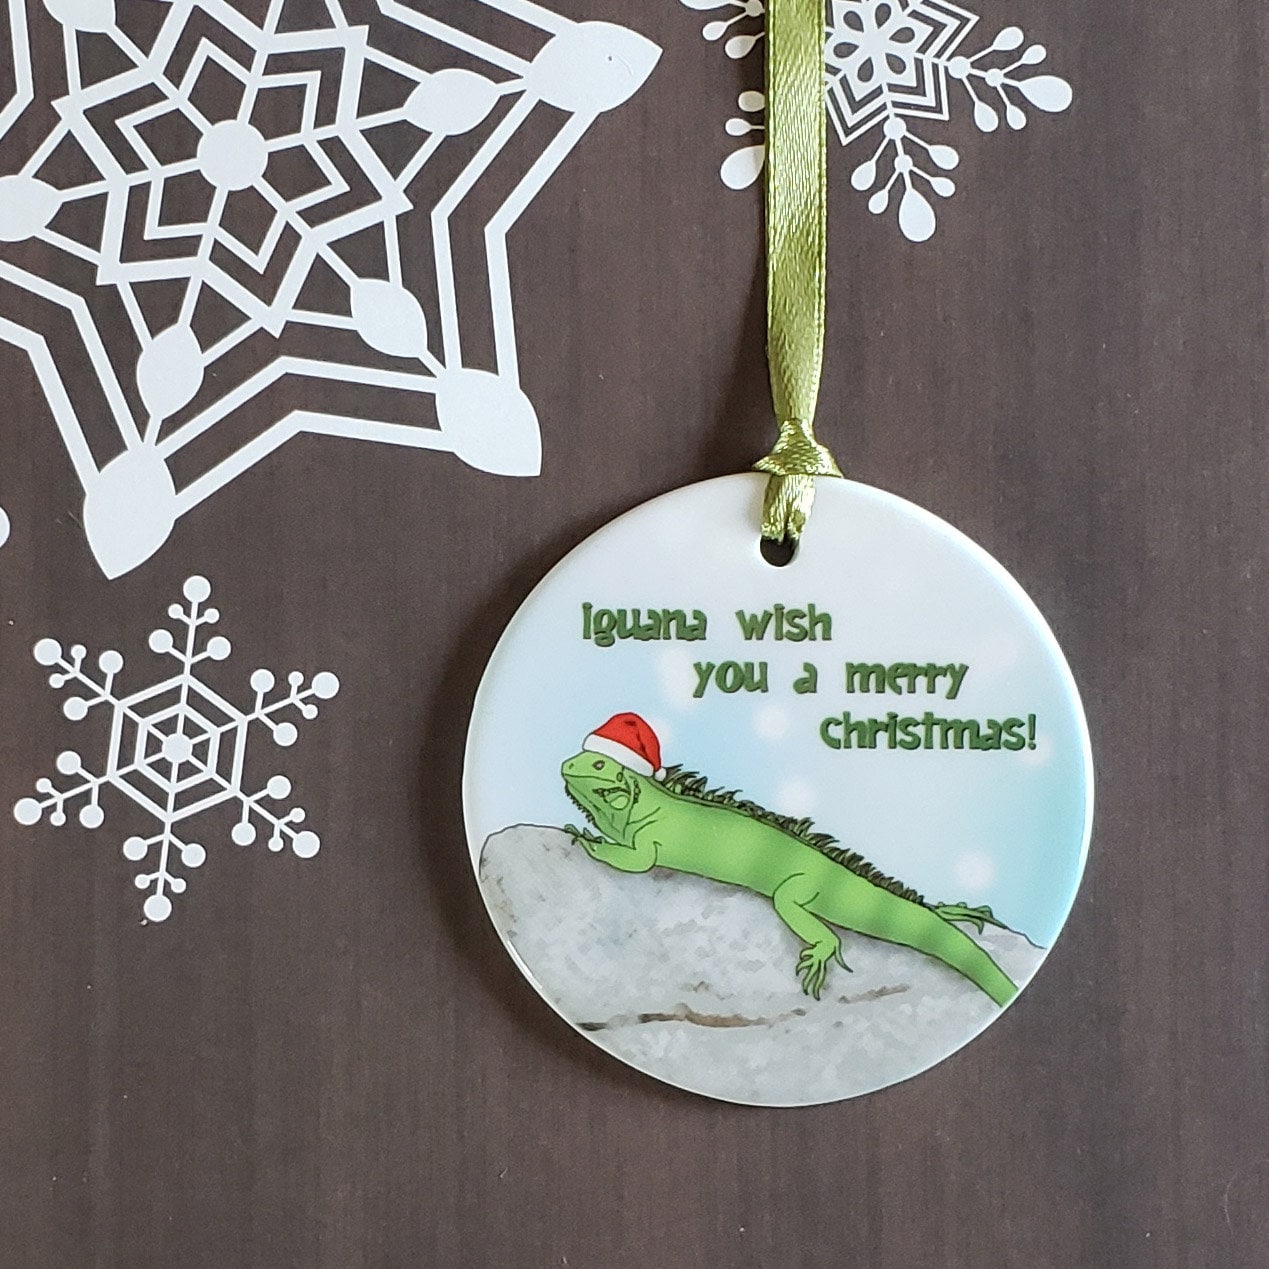 Iguana Wish You Merry Christmas Ornament